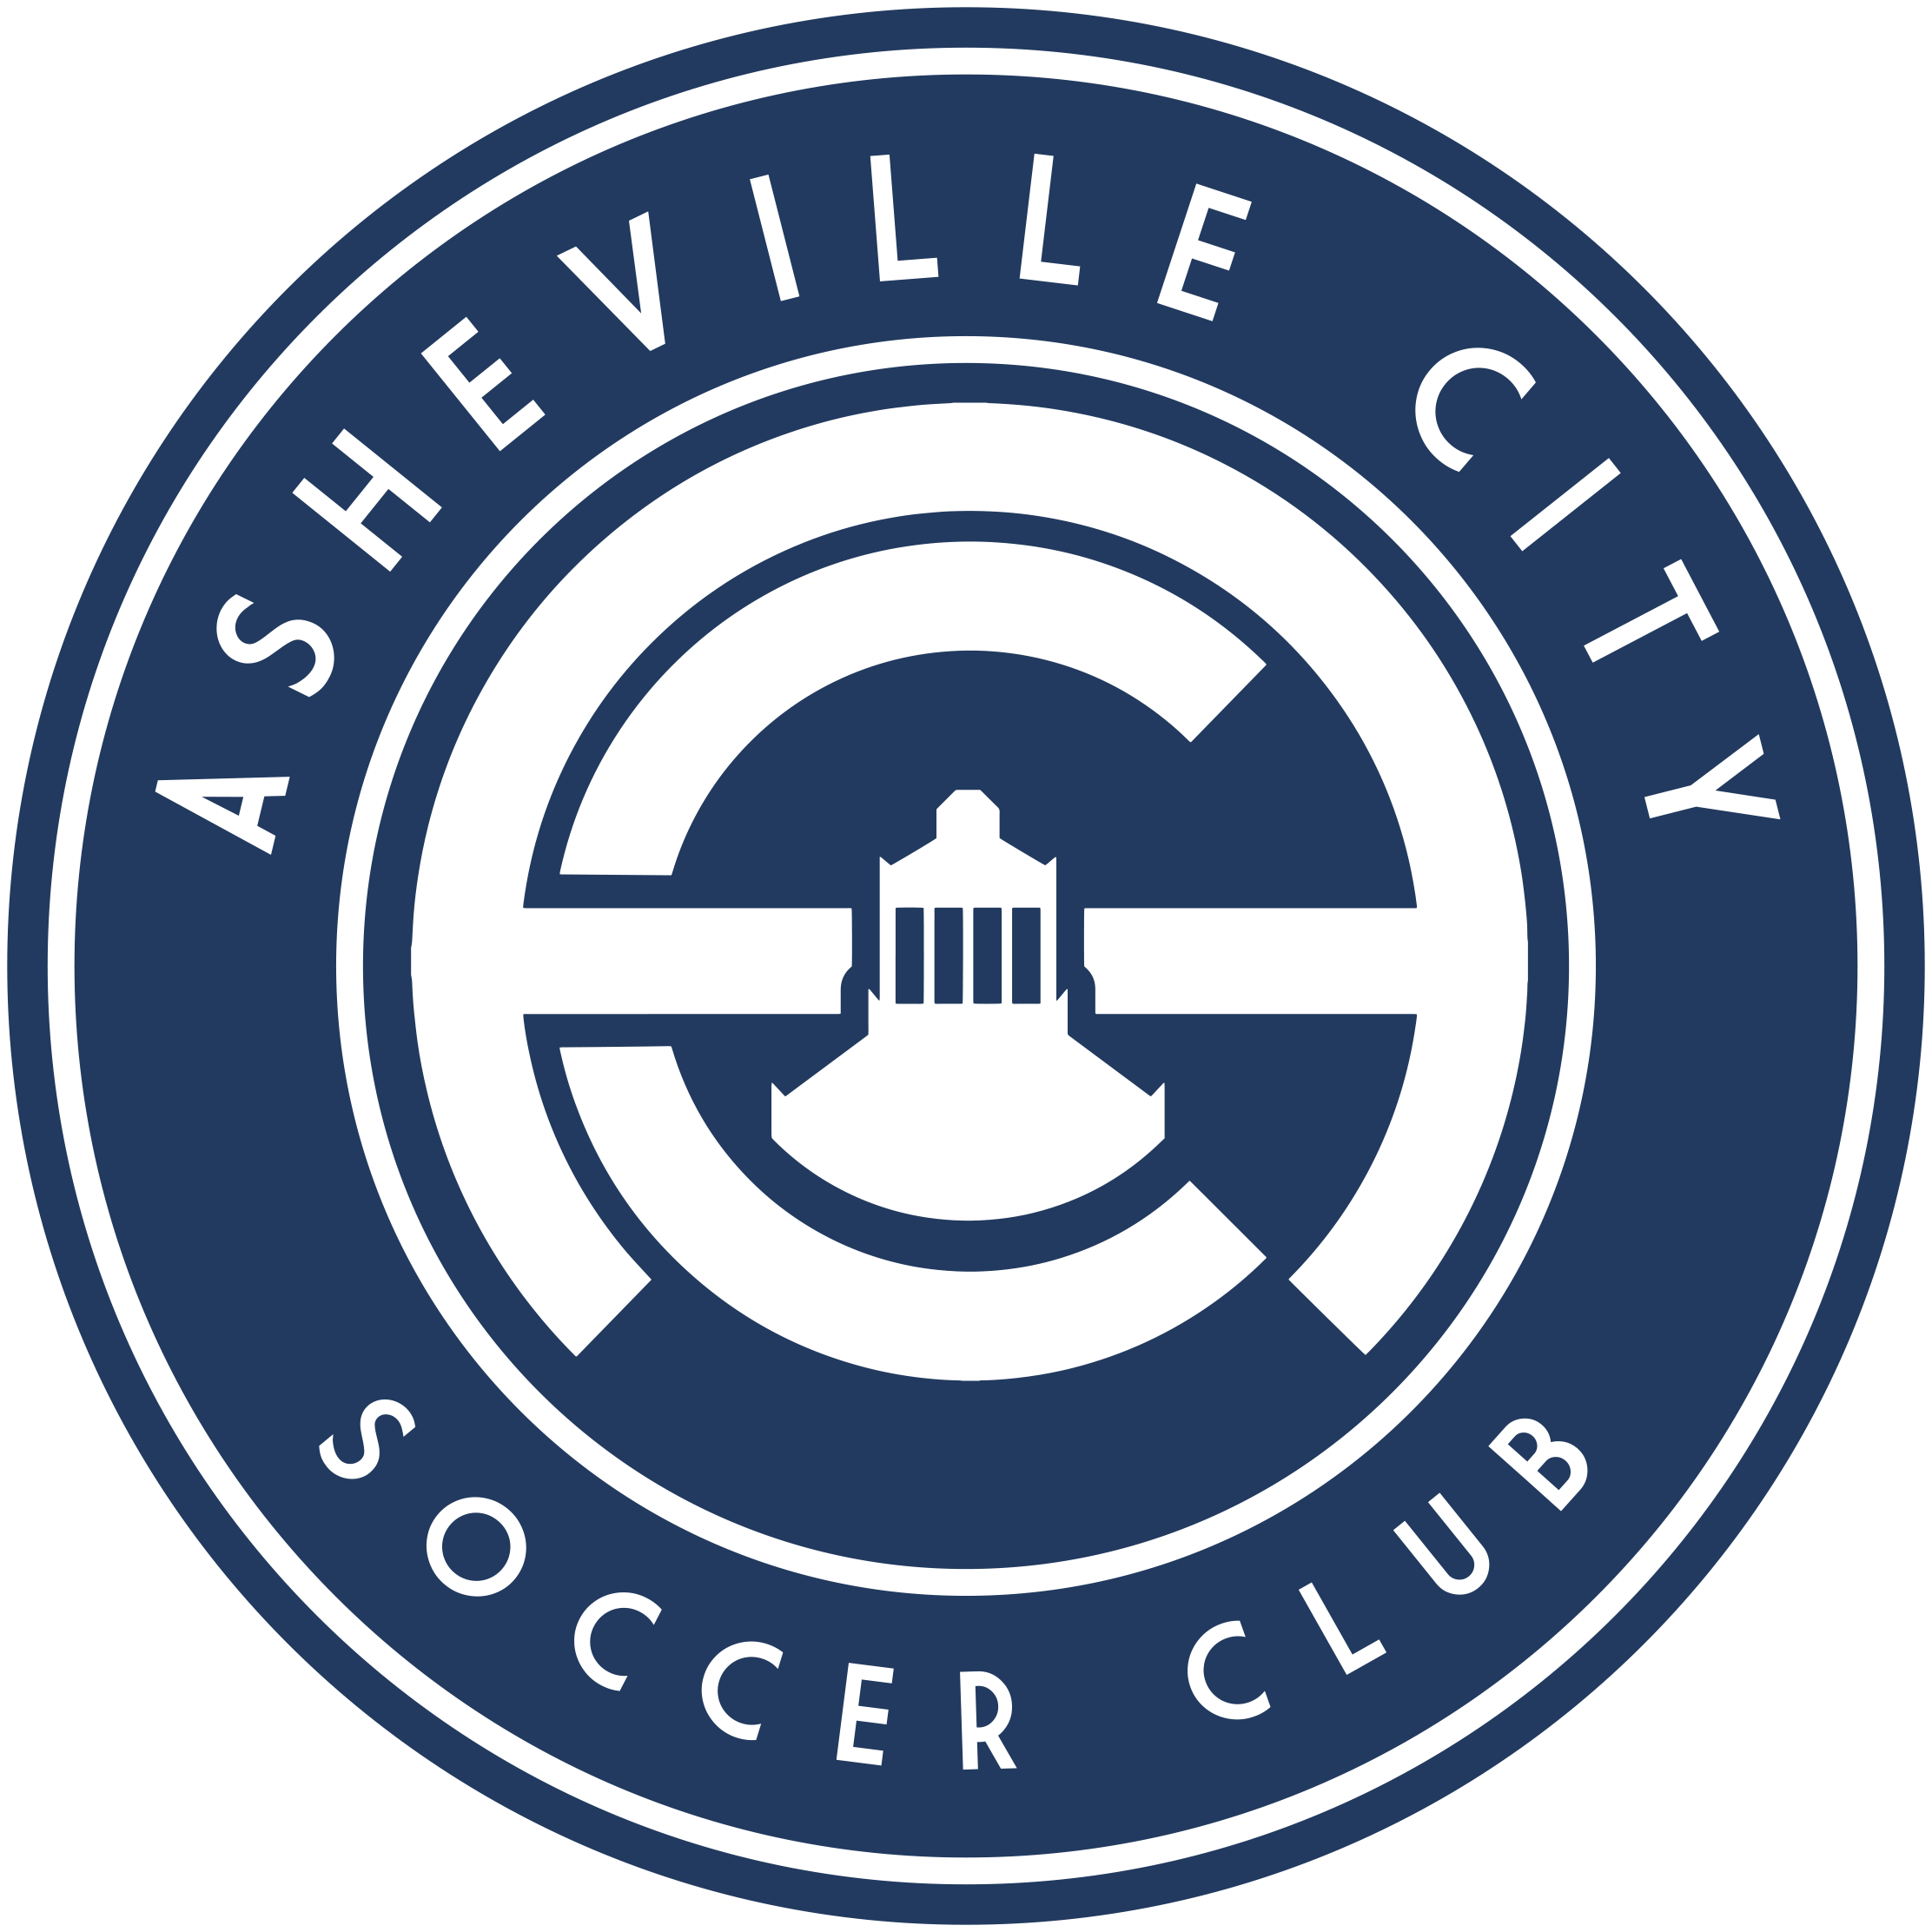 Asheville City Soccer Club | Asheville, NC's Official Travel Site